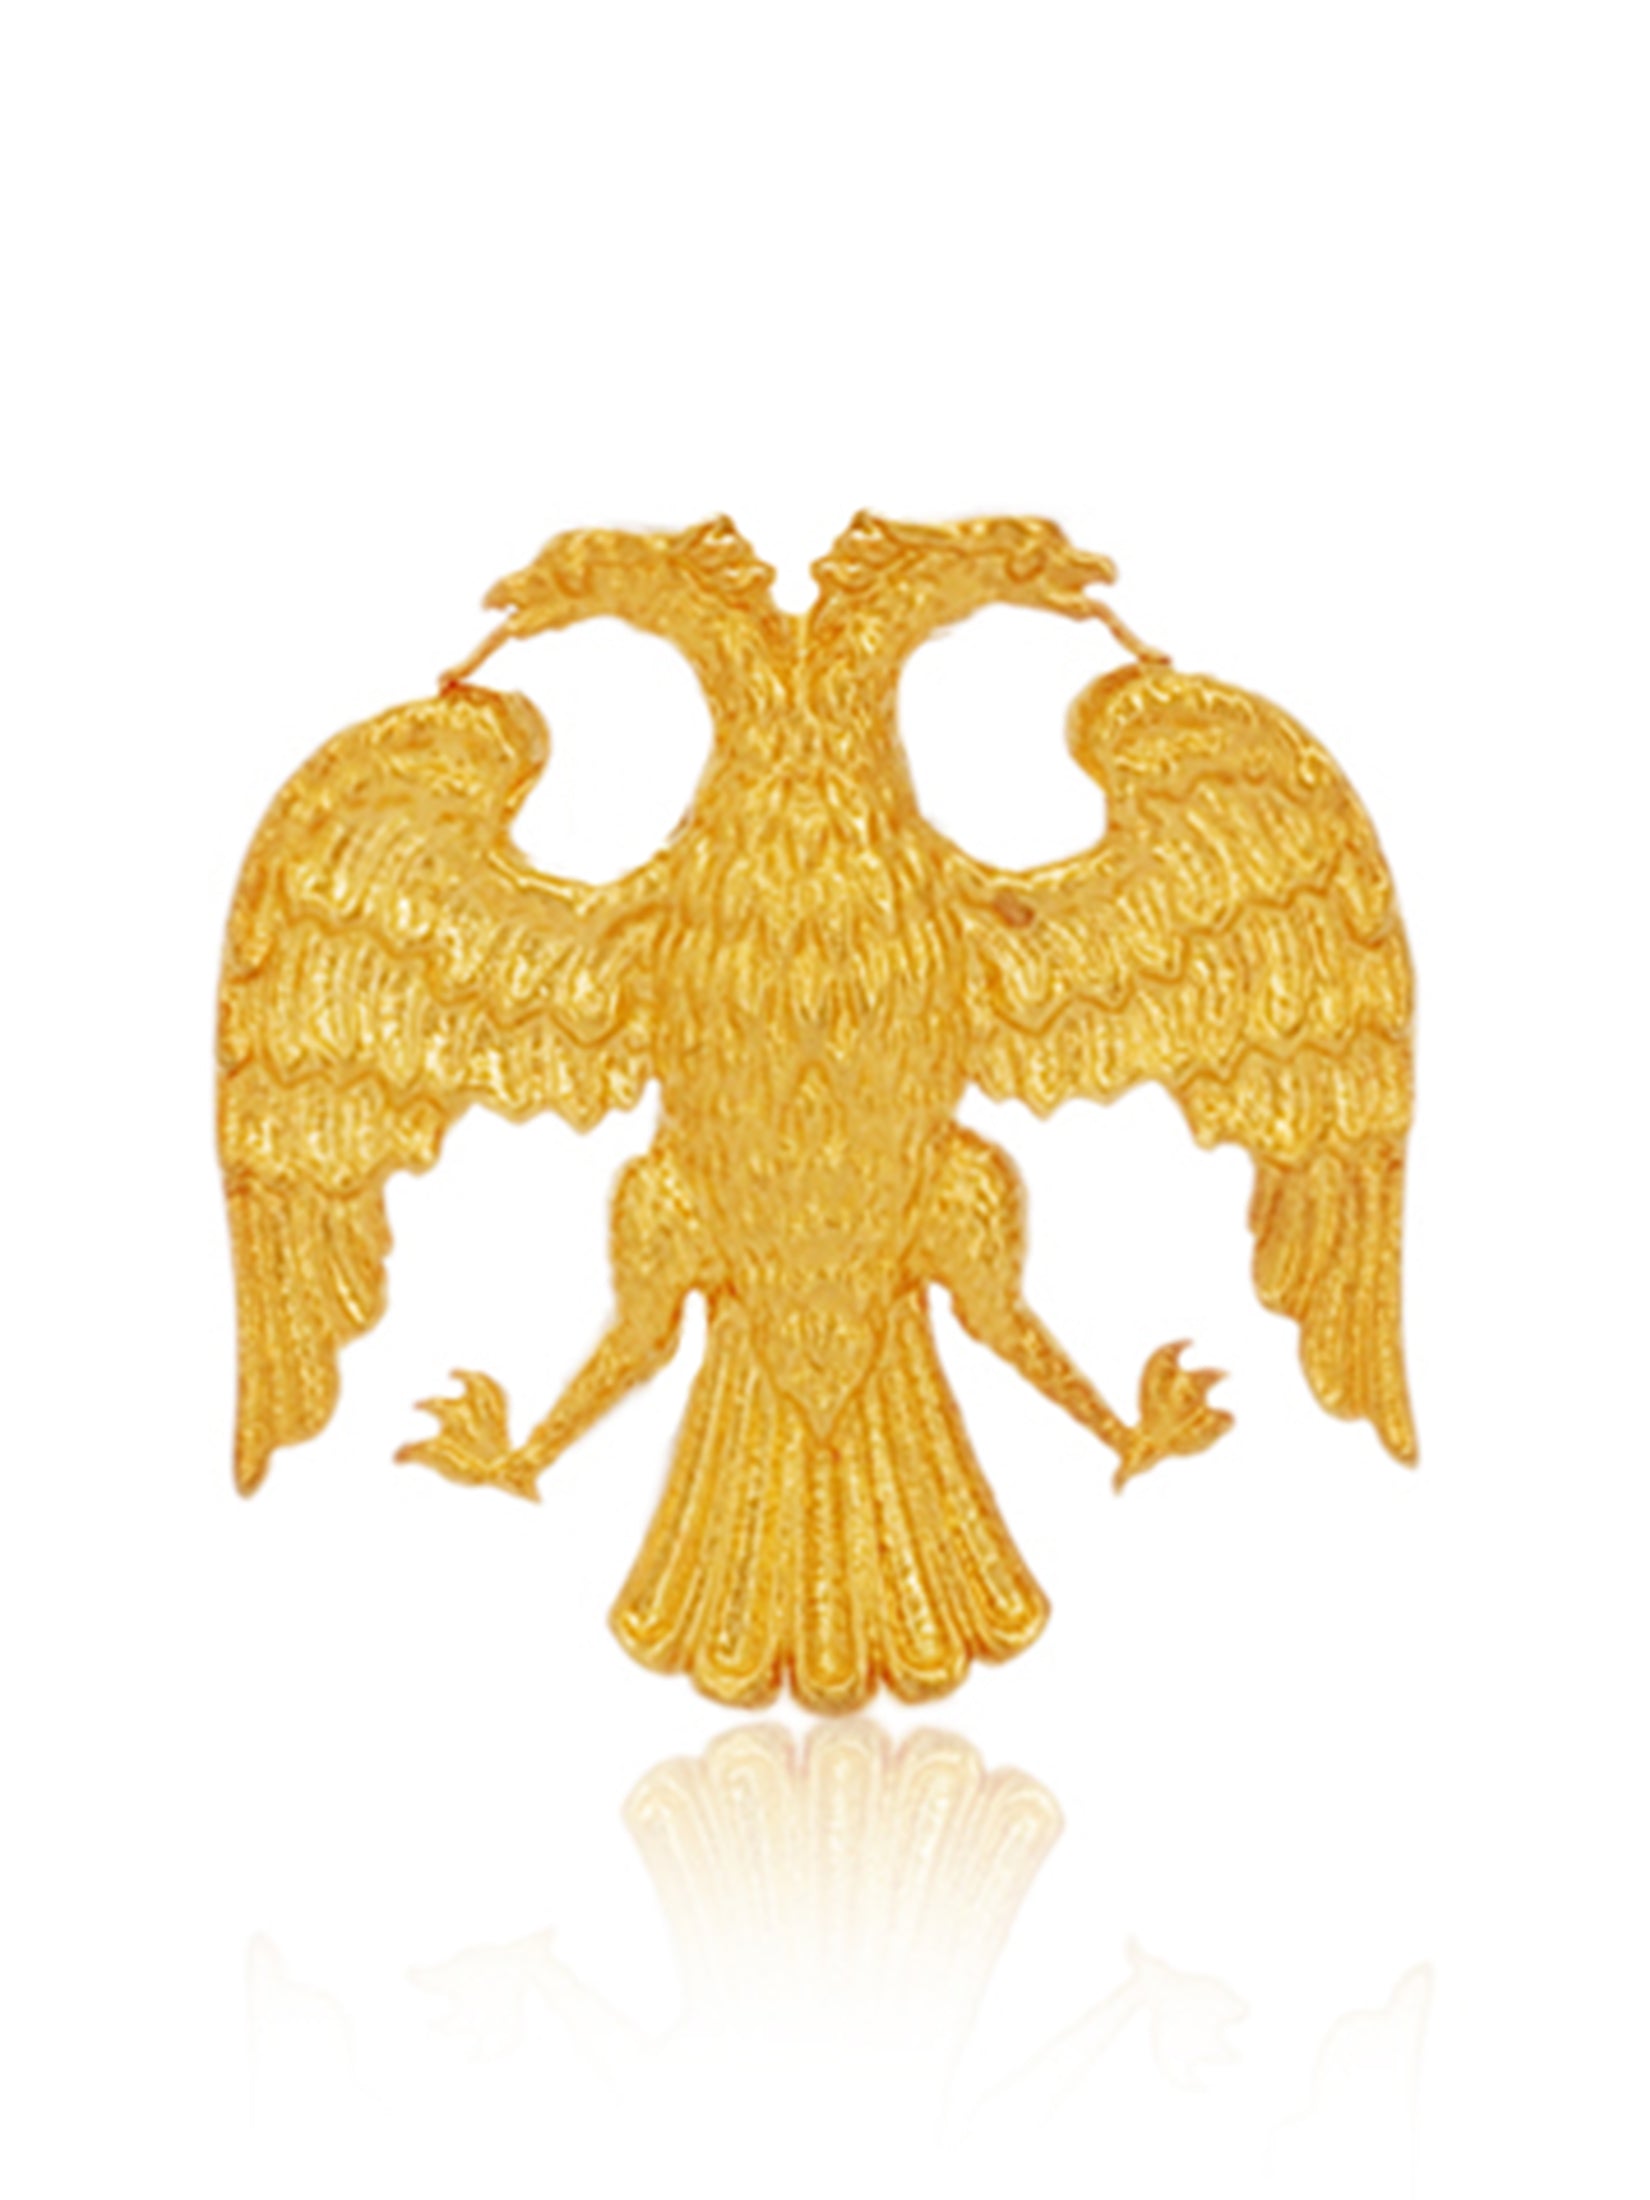 Byzantine Eagle Cufflinks